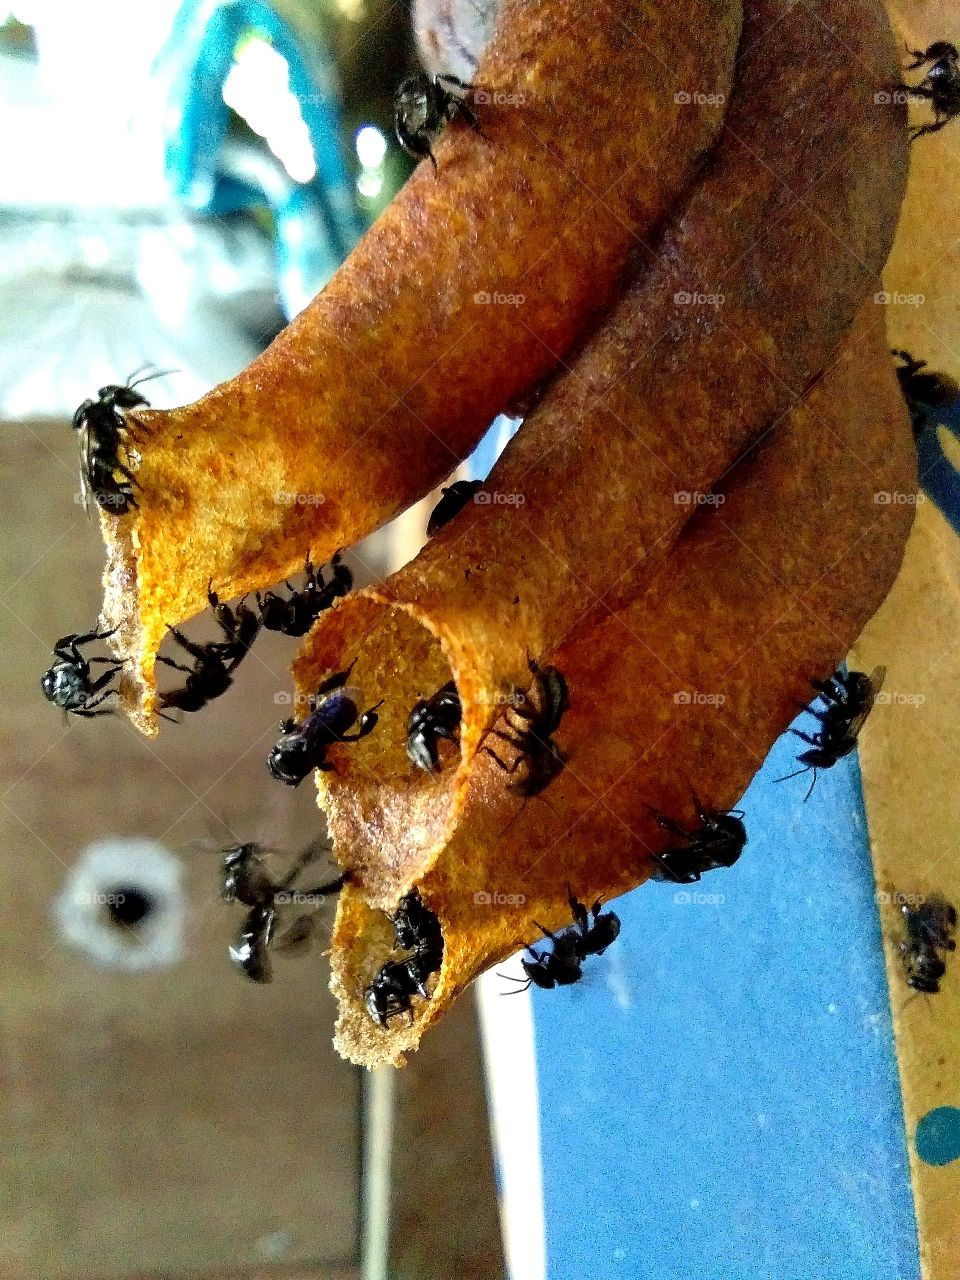 madu kelulut, small type of bee building their nest